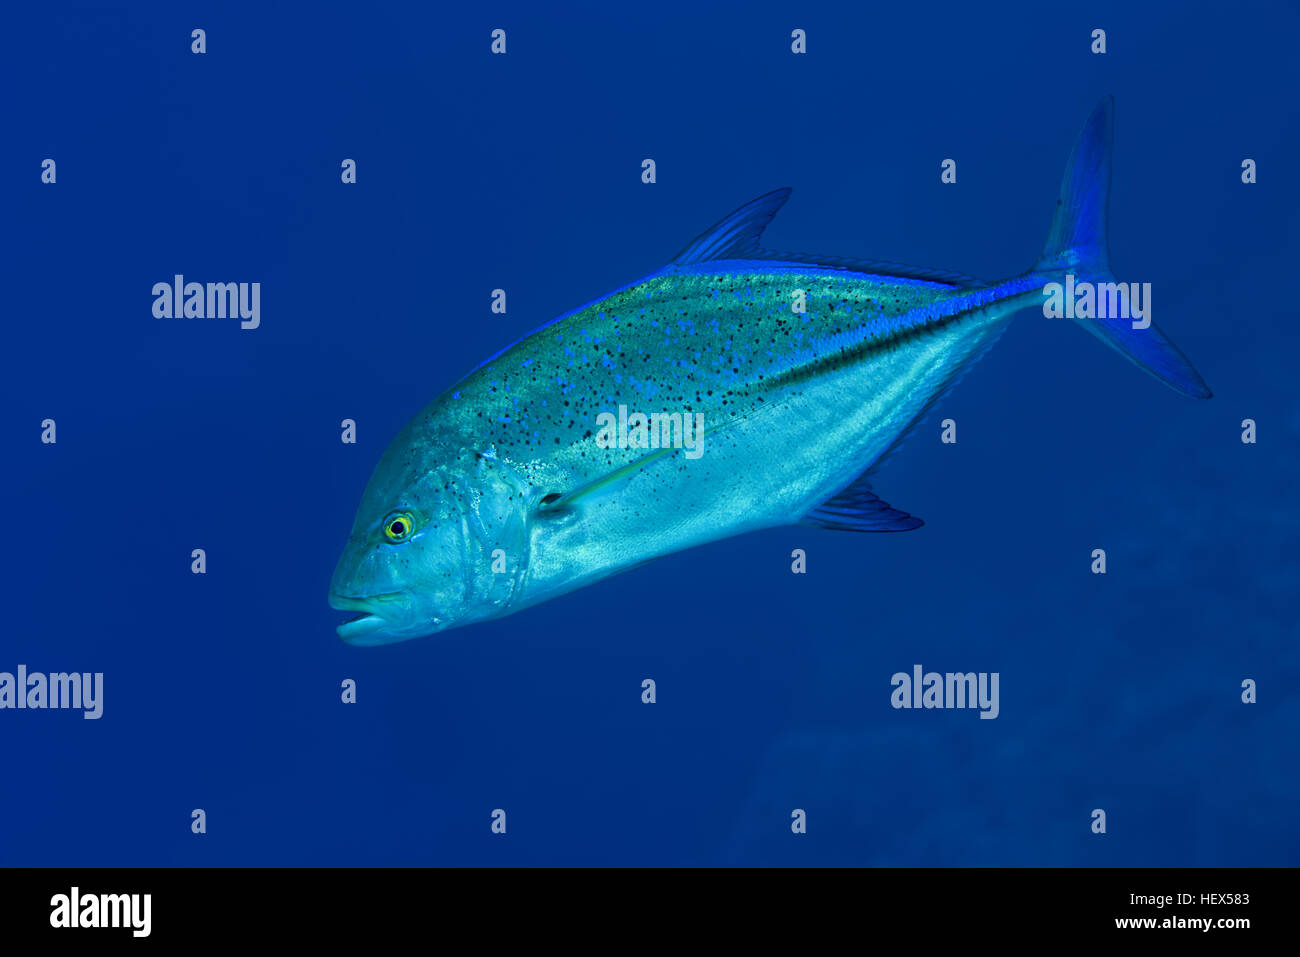 Bluefin trevally, Bayad, Bluefin jack, bluefin kingfish, Bluefinned crevalle, Blue ulua, Omilu or Spotted trevally (Caranx melampygus) on blue backgro Stock Photo